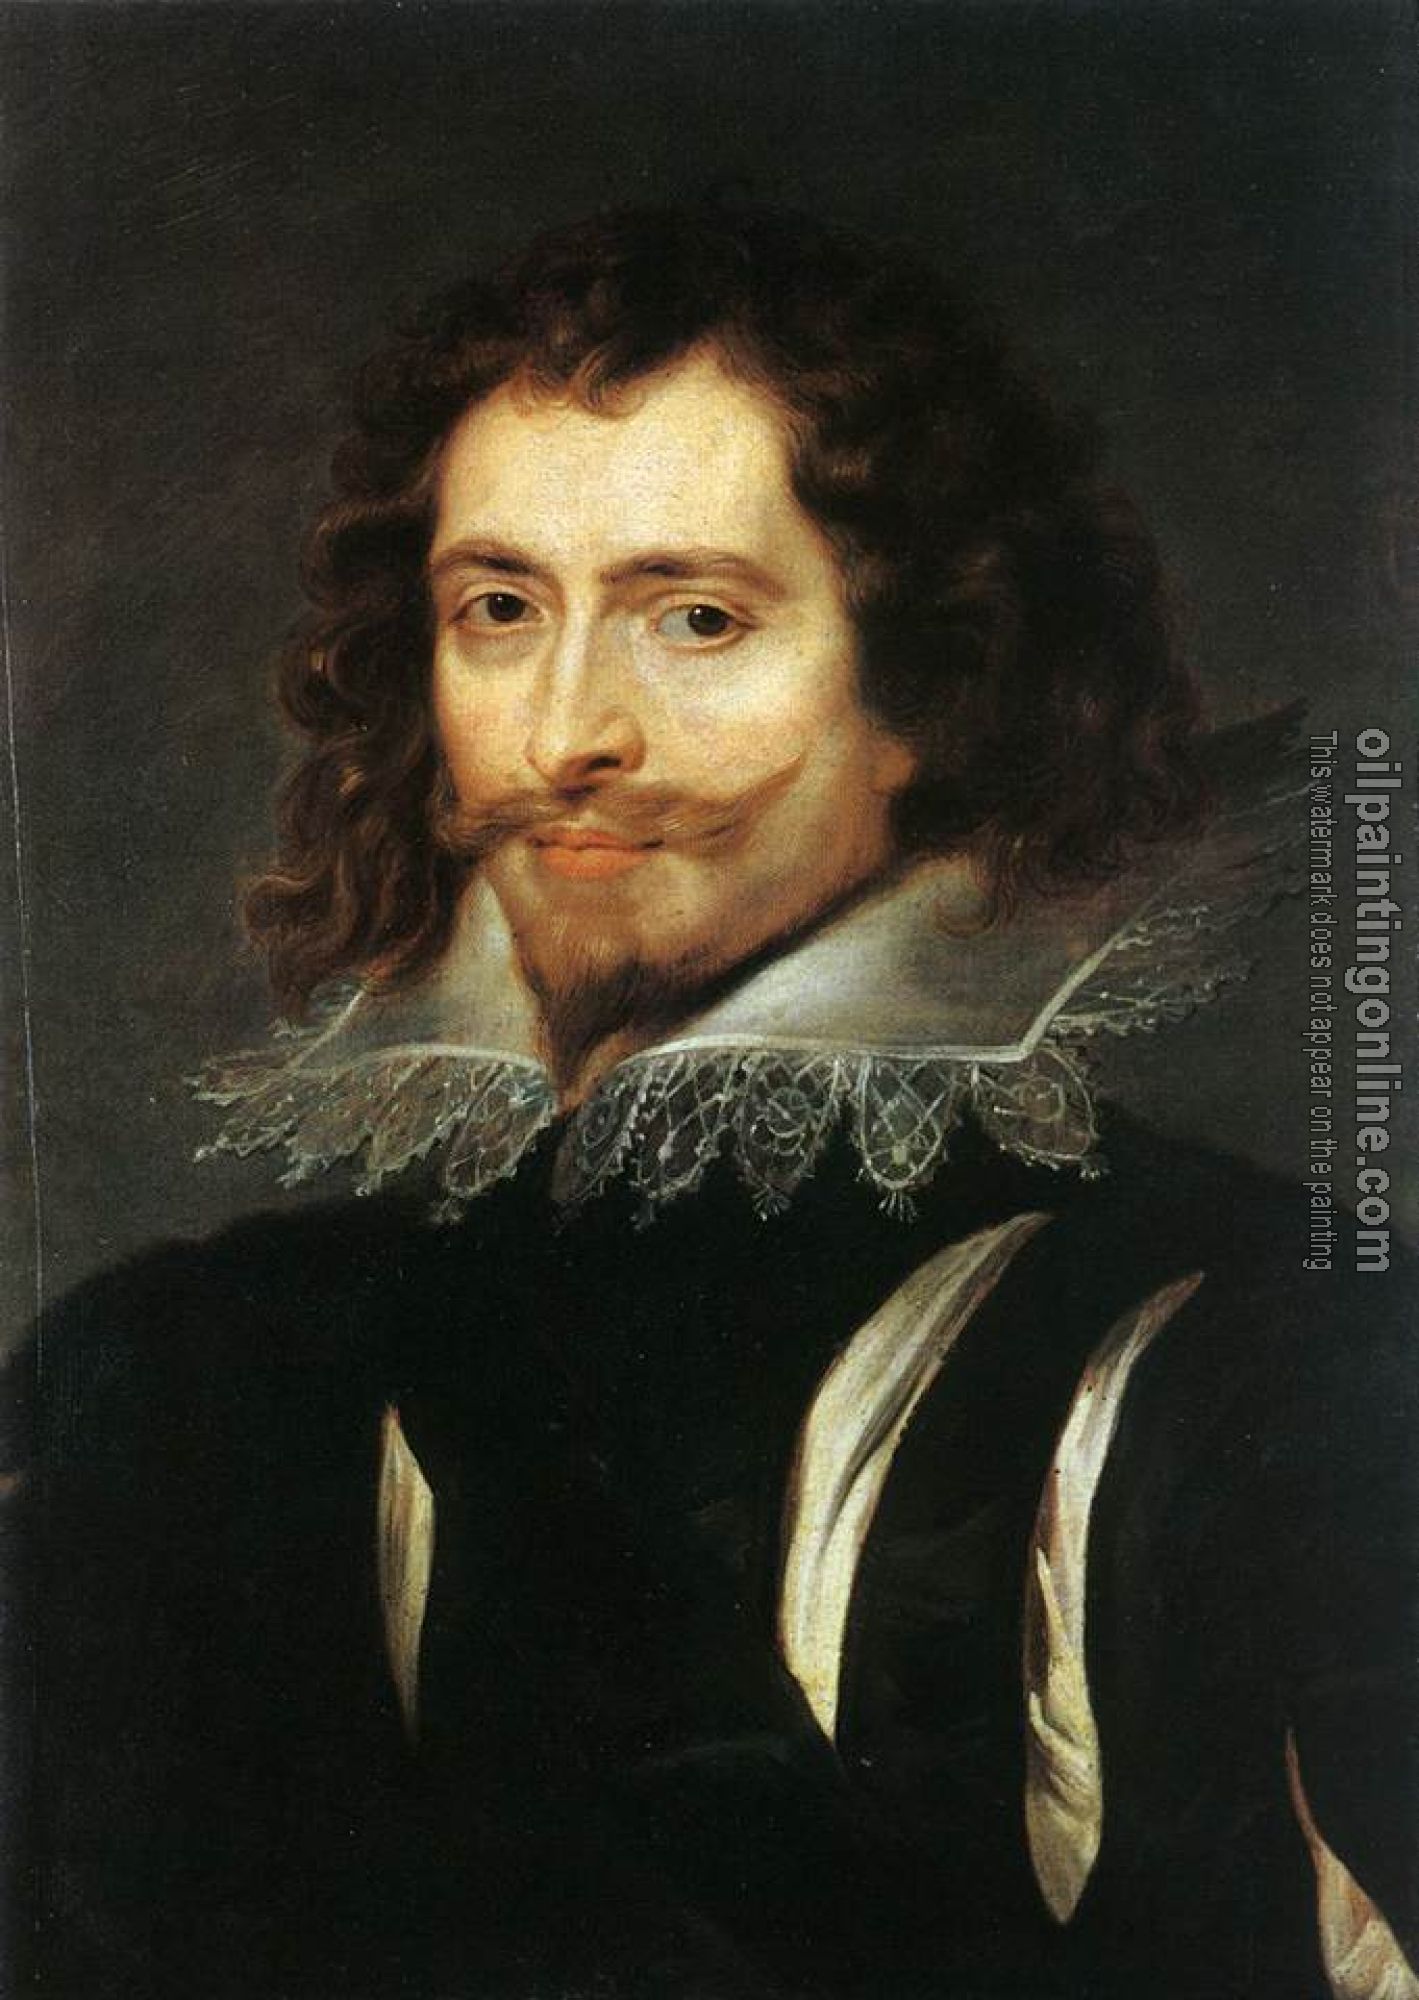 Rubens, Peter Paul - The Duke of Buckingham